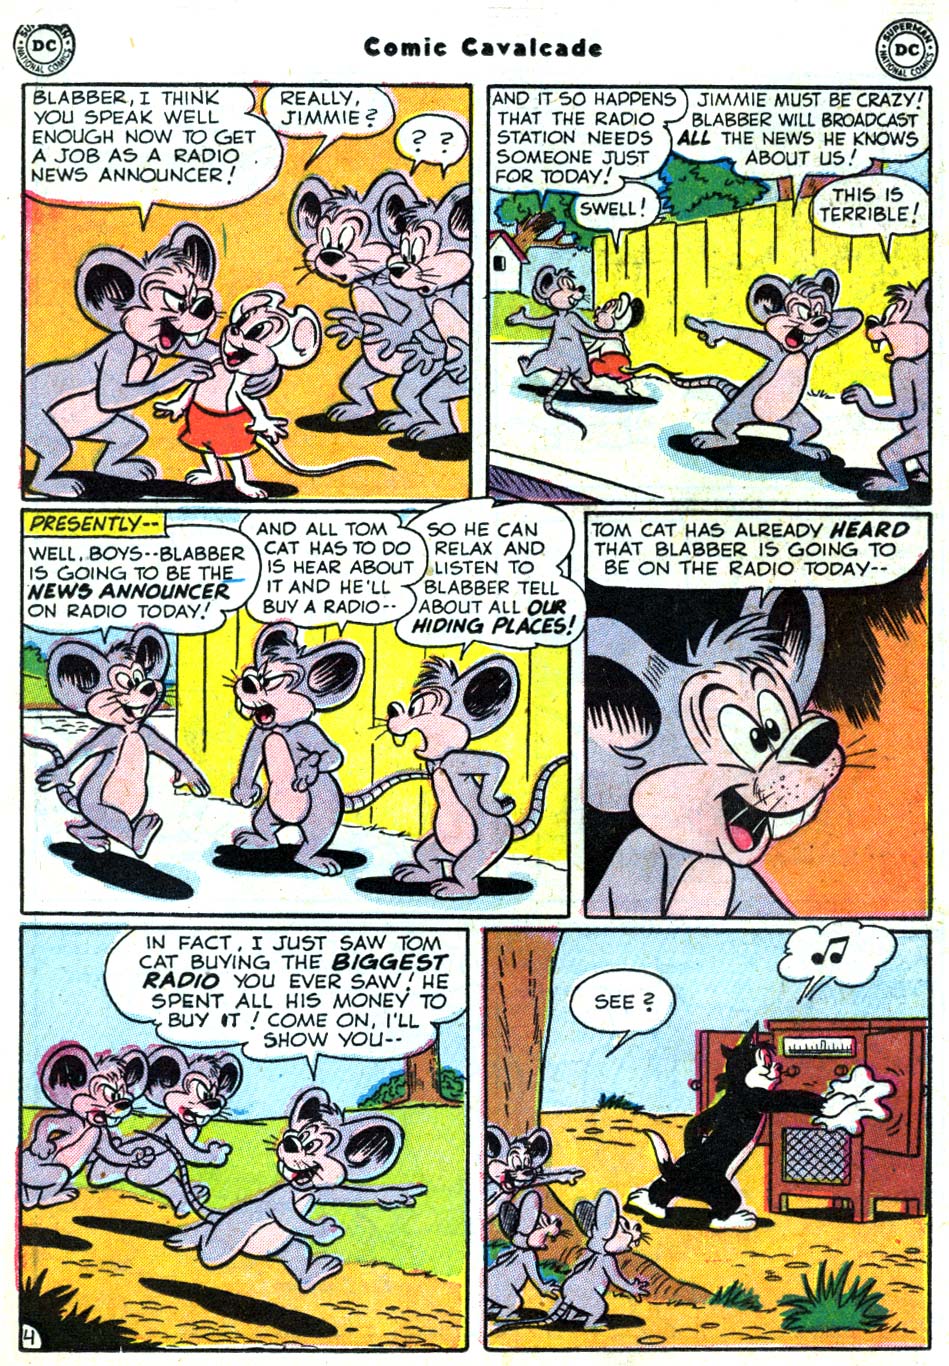 Comic Cavalcade issue 46 - Page 14